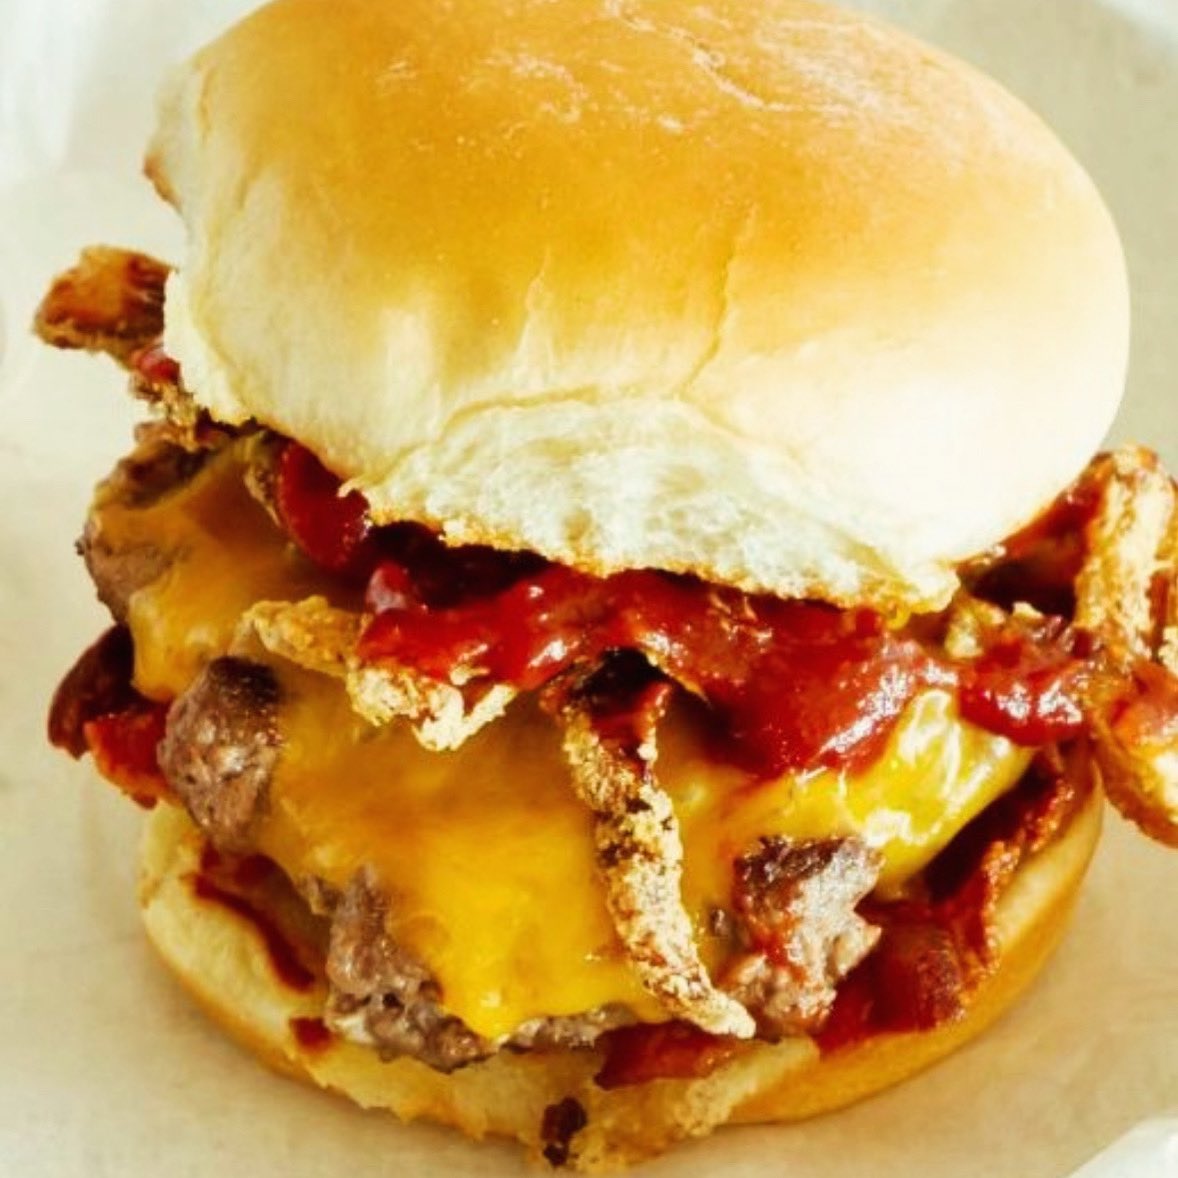 Crush a #LemmyBurger or nine today 1130-2p at #RowesWharf on @HelloGreenway NOW!!
🤘🍔🤘
Hail & Grill!  
#eatlocal #foodporn #foodie #bostonfoodtrucks #foodgasm #cheflife #burgertime #bostoneats #pubgrub #motorhead #lemmy #bbqburger #barfood #drinklocal #burgers #burgersarelife